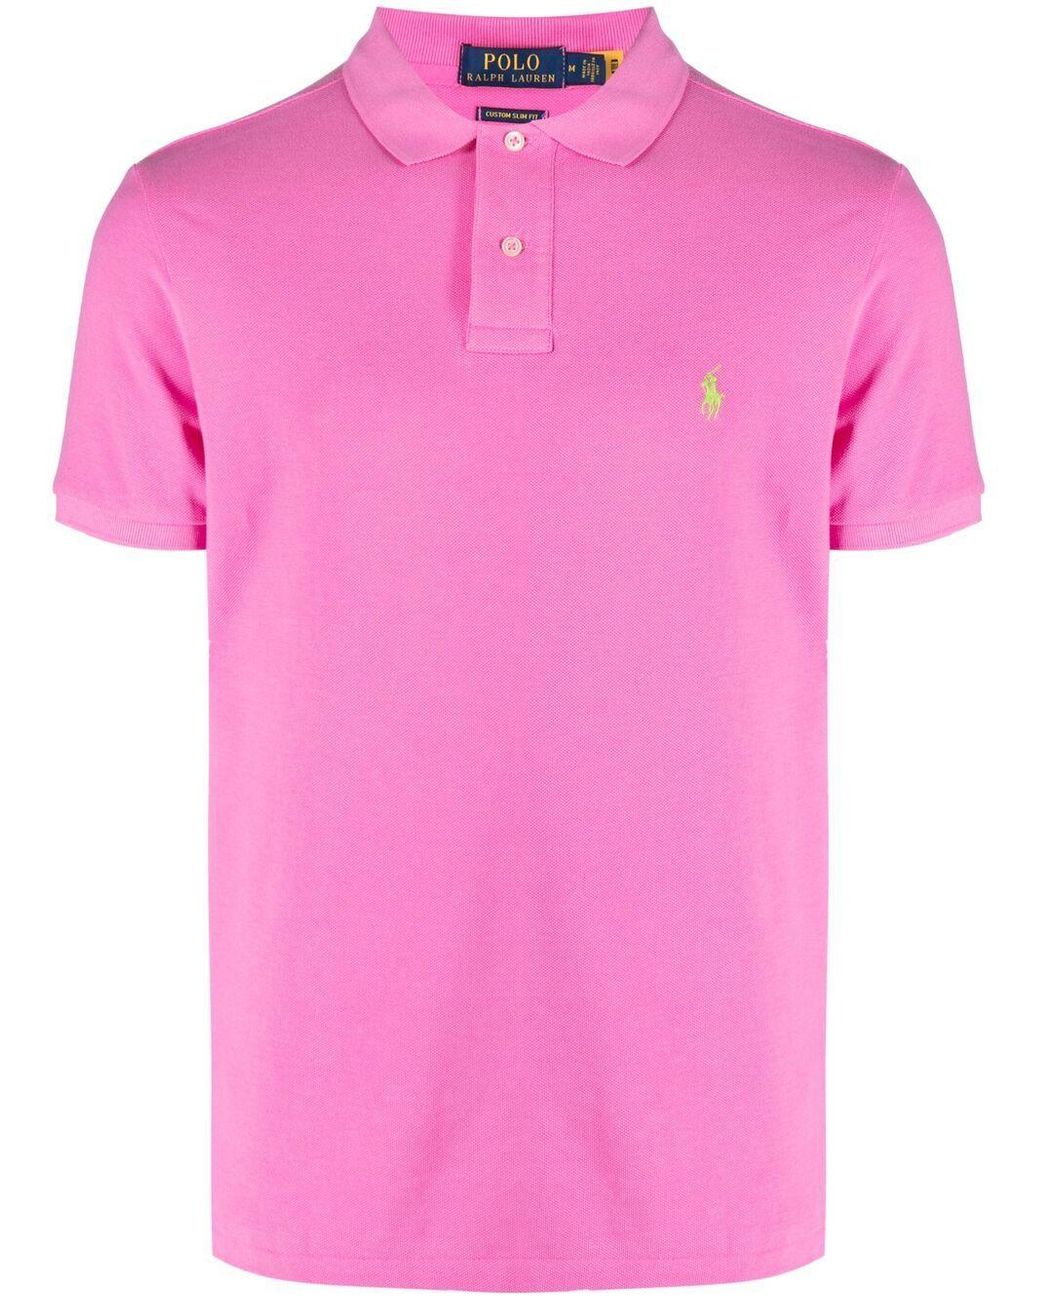 Polo Ralph Lauren Cotton Polo Pony Piqué Polo Shirt in Pink for Men - Lyst